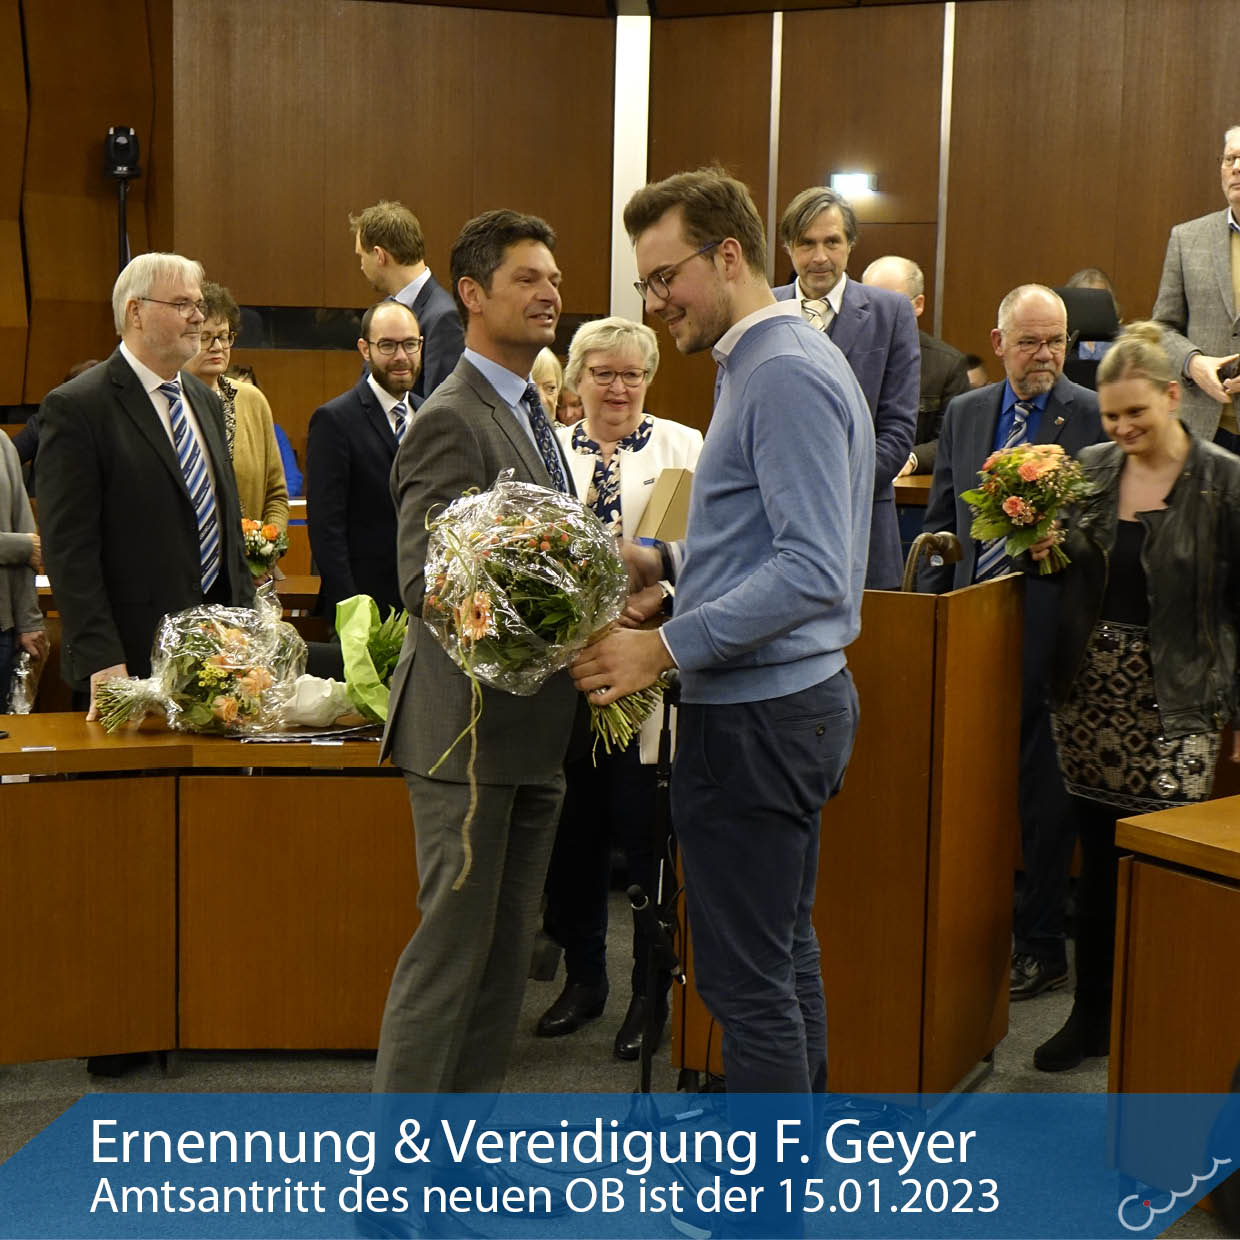 Ernennung des Oberbürgermeisters Dr. Fabian Geyer